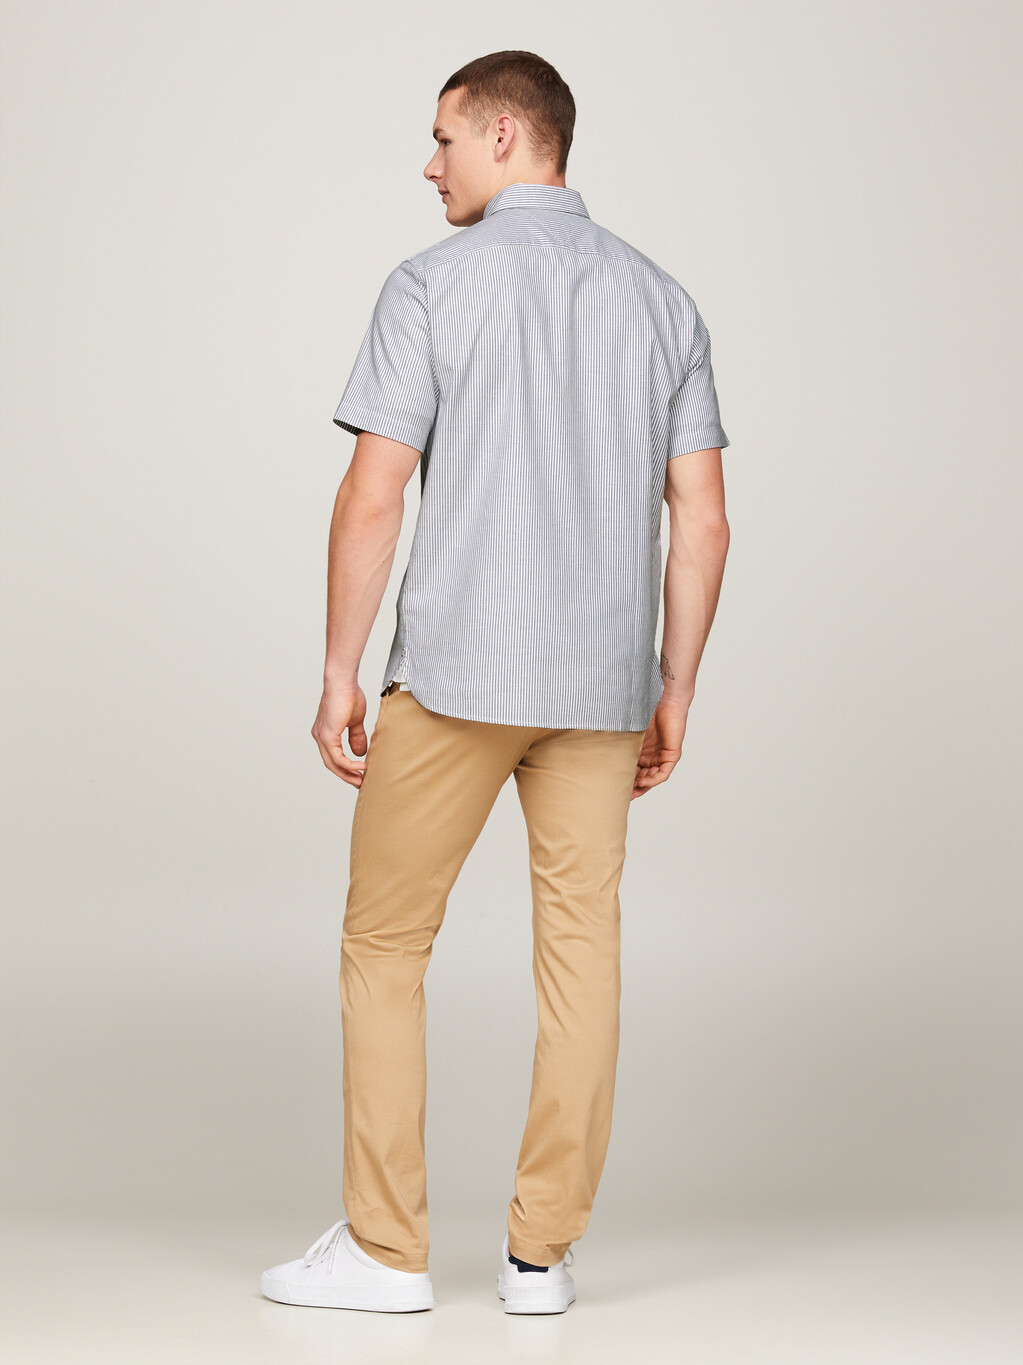 Flag Stripe Short Sleeve Shirt, Carbon Navy / Optic White, hi-res